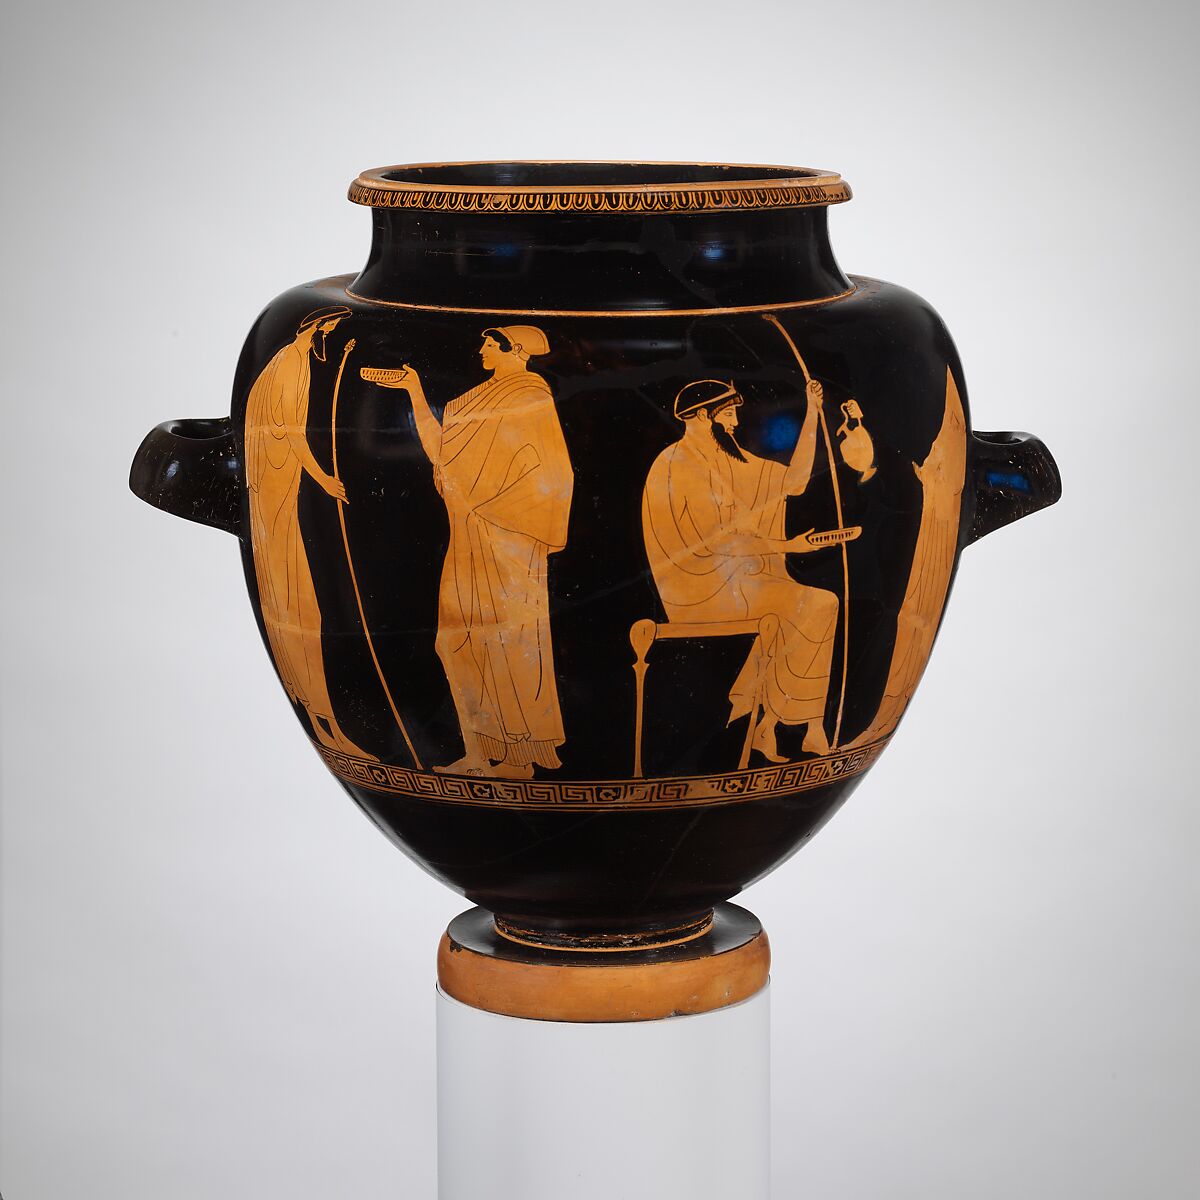 Terracotta stamnos (jar), Attributed to the Copenhagen Painter or the Syriskos Painter, Terracotta, Greek, Attic 